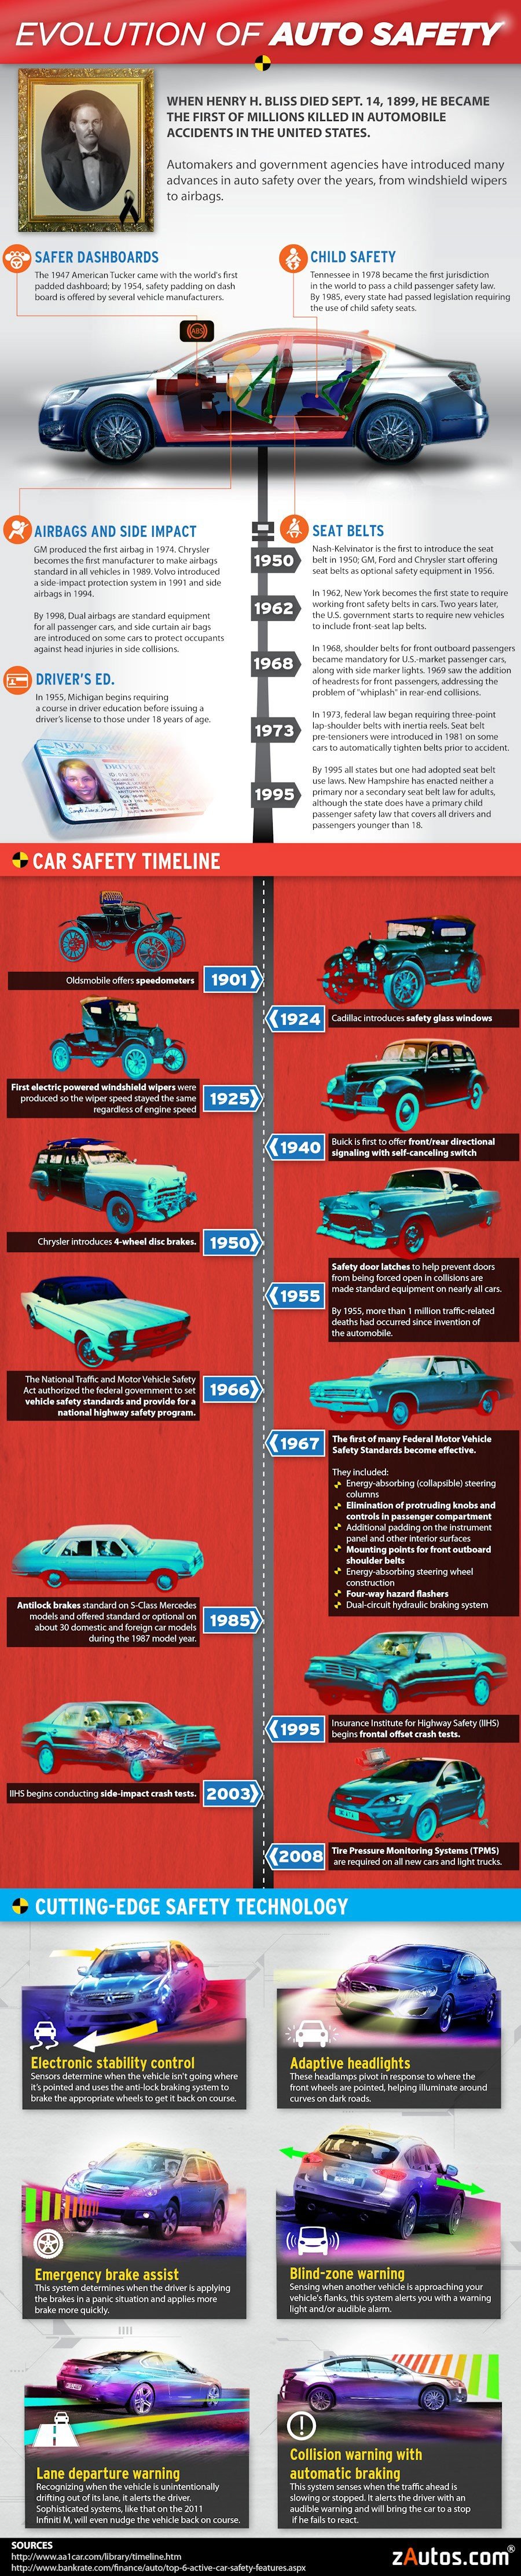 Evolution of Auto Safety -ComplianceandSafety.com